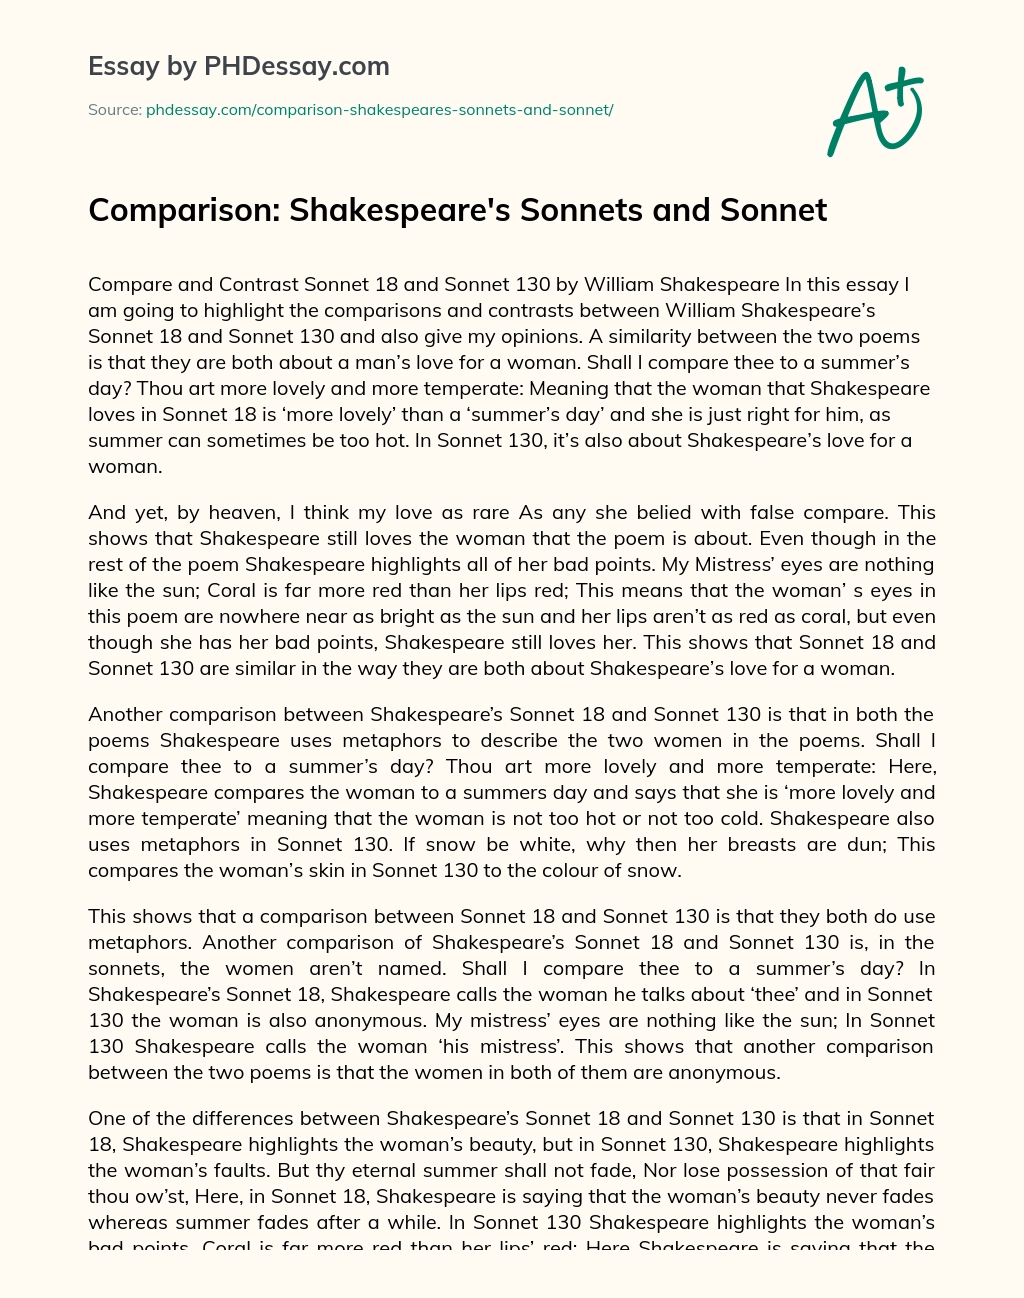 Comparison: Shakespeare’s Sonnets and Sonnet essay